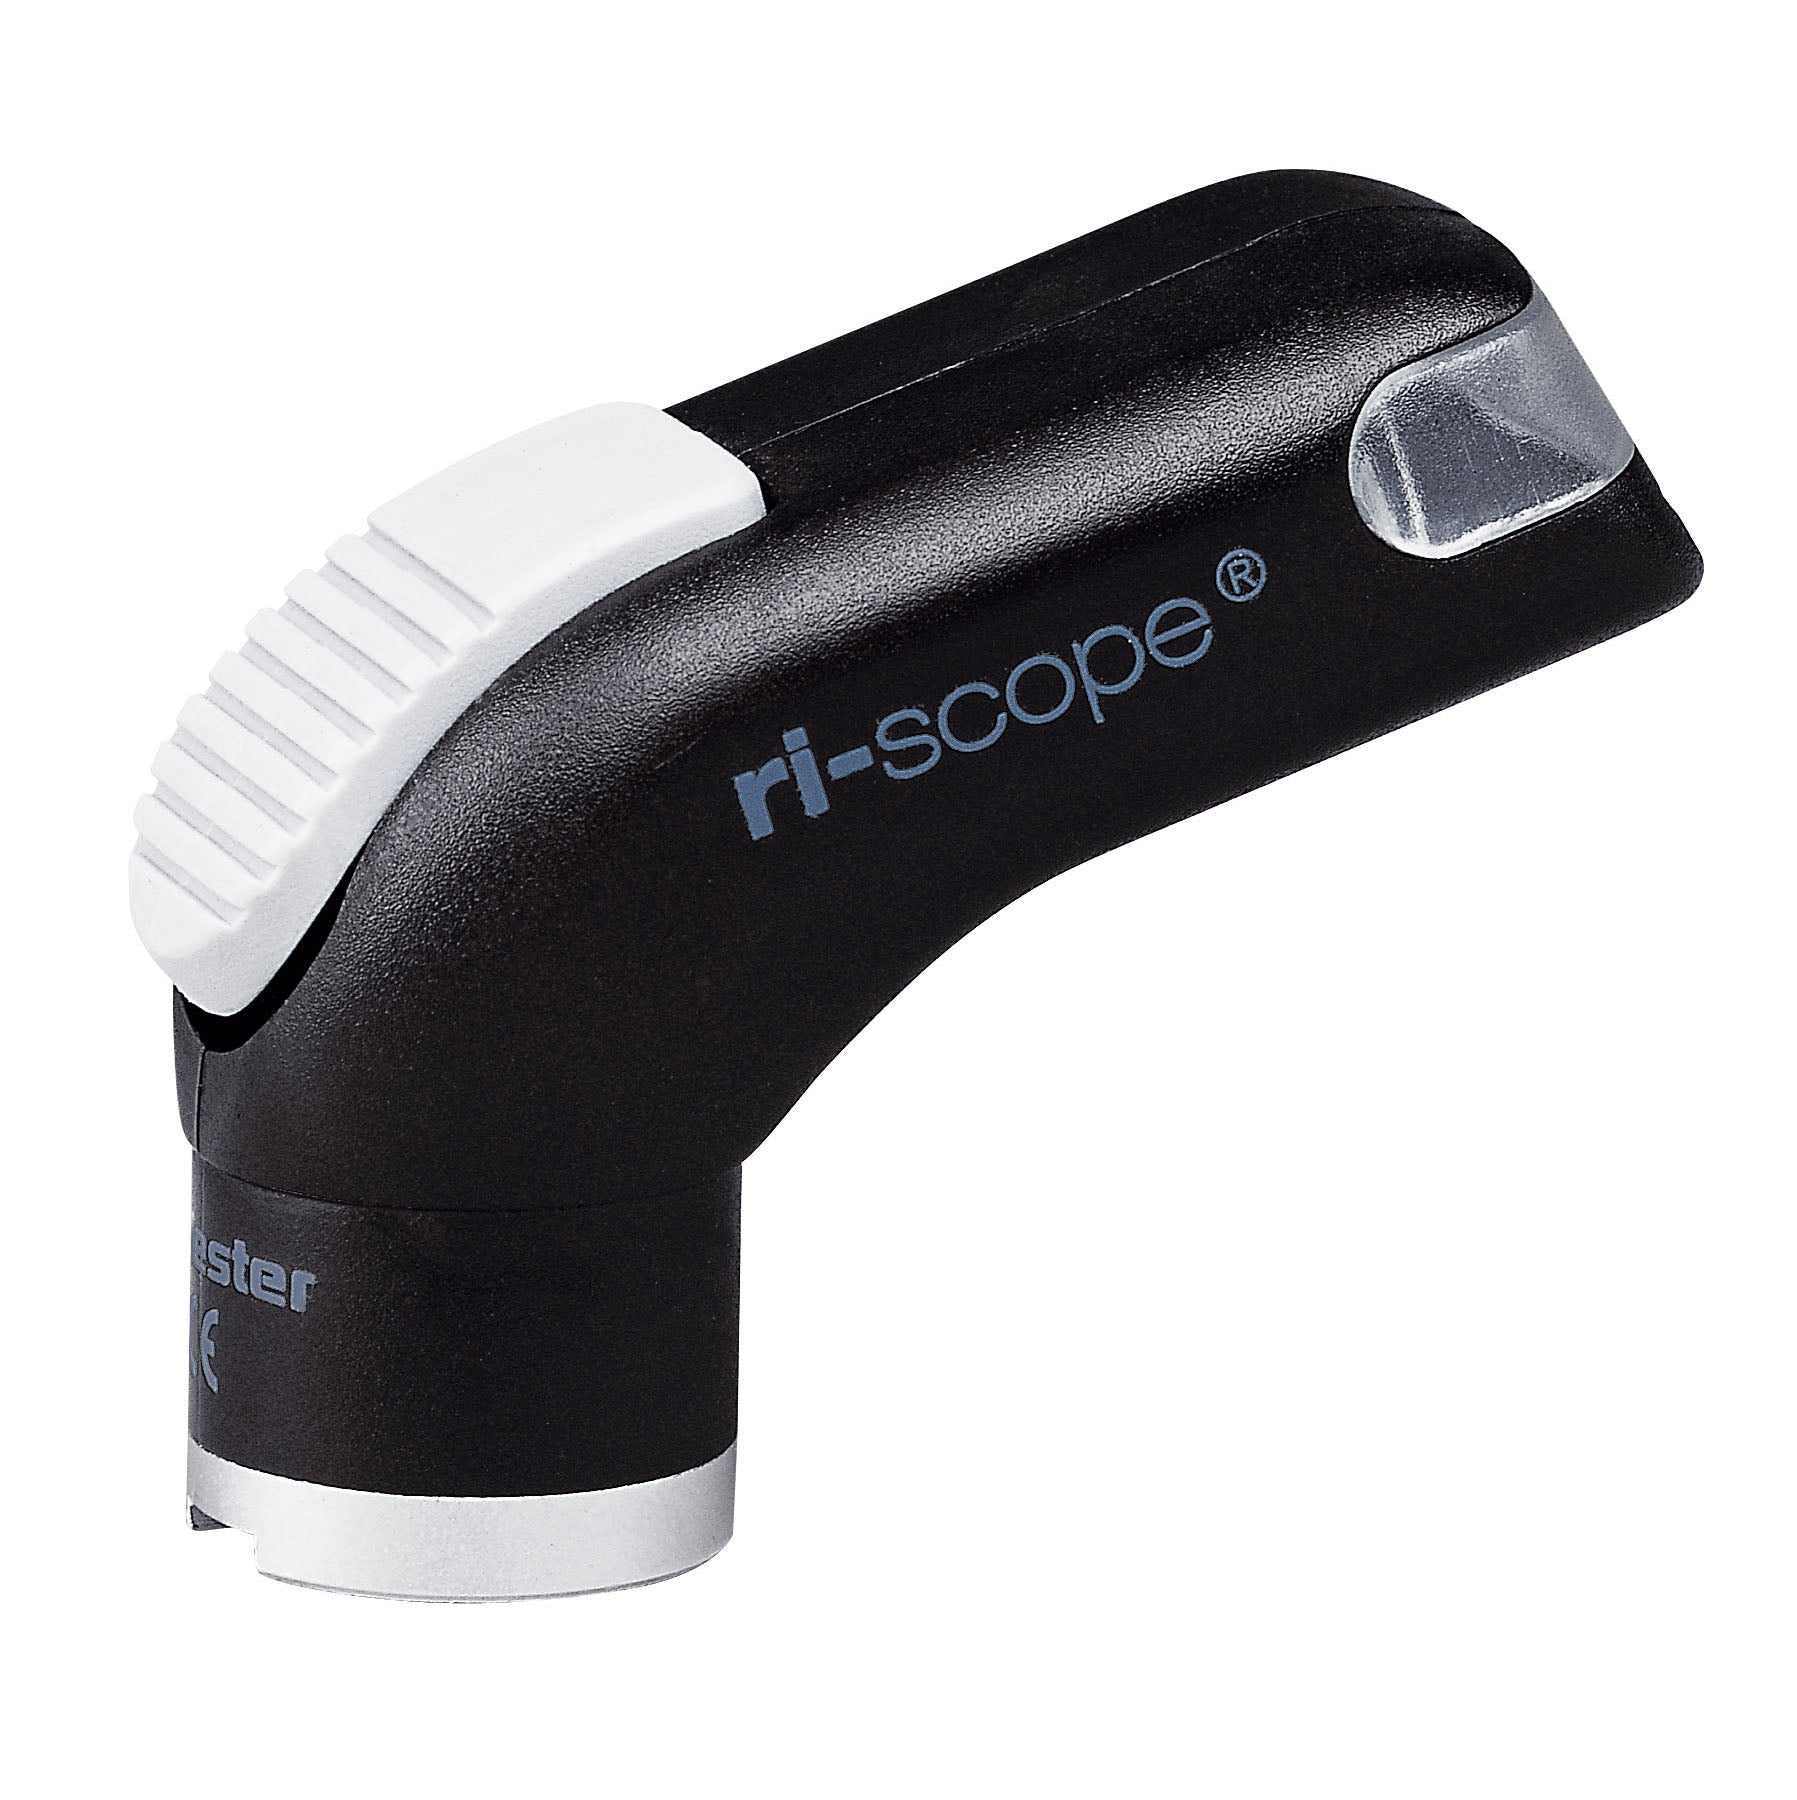 ri-scope® F.O. tongue blade holder LED 3.5 V, anti-theft proof